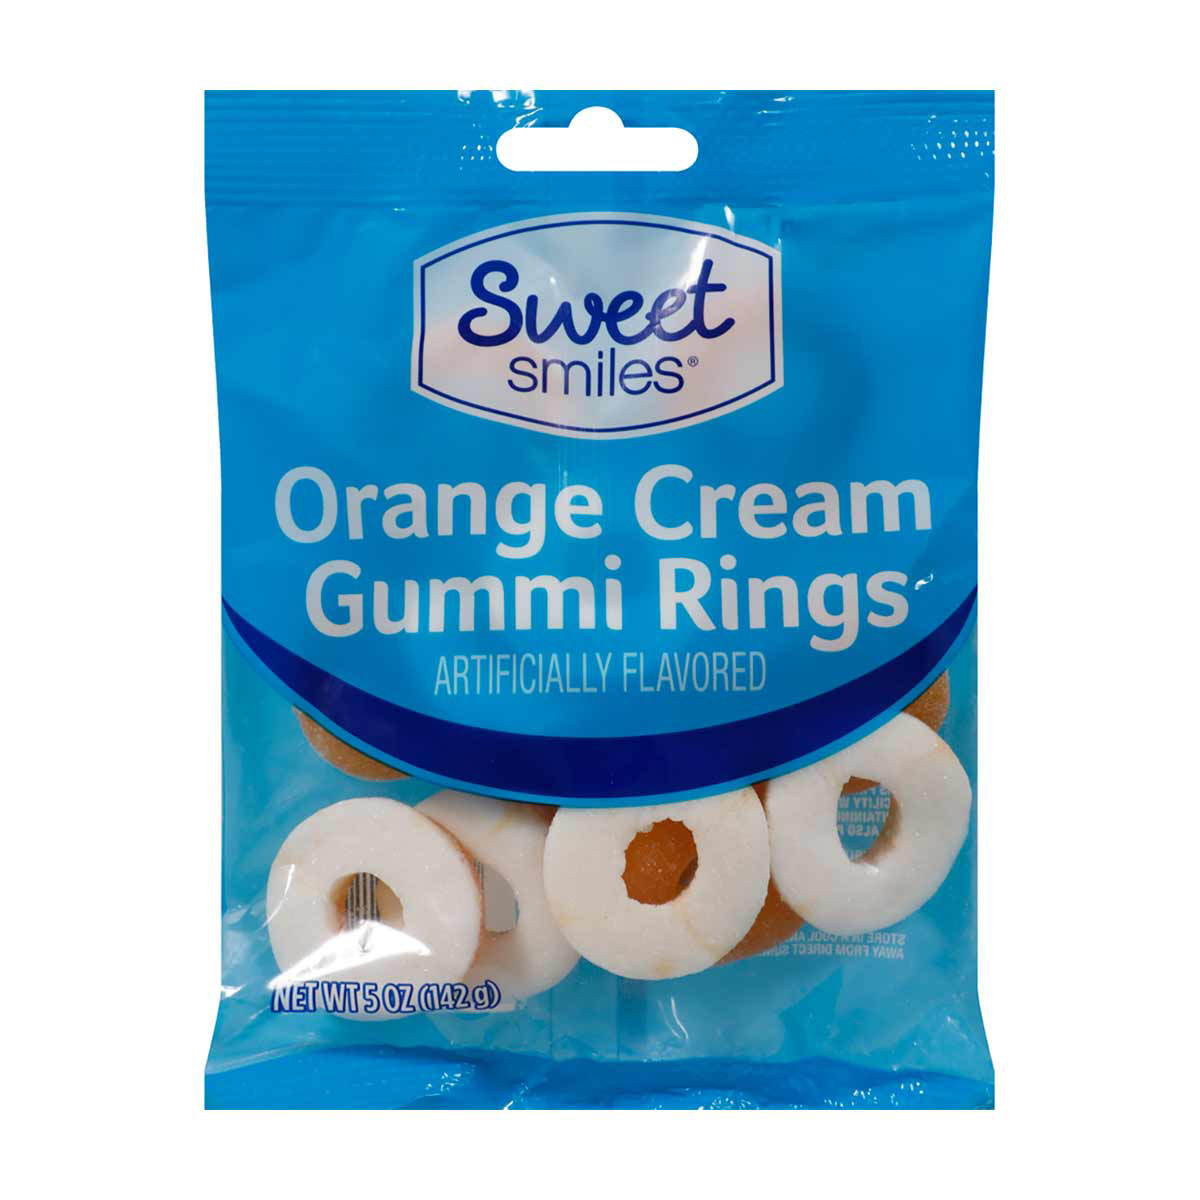 Sweet Smiles Orange Cream Gummi Rings, 5 oz